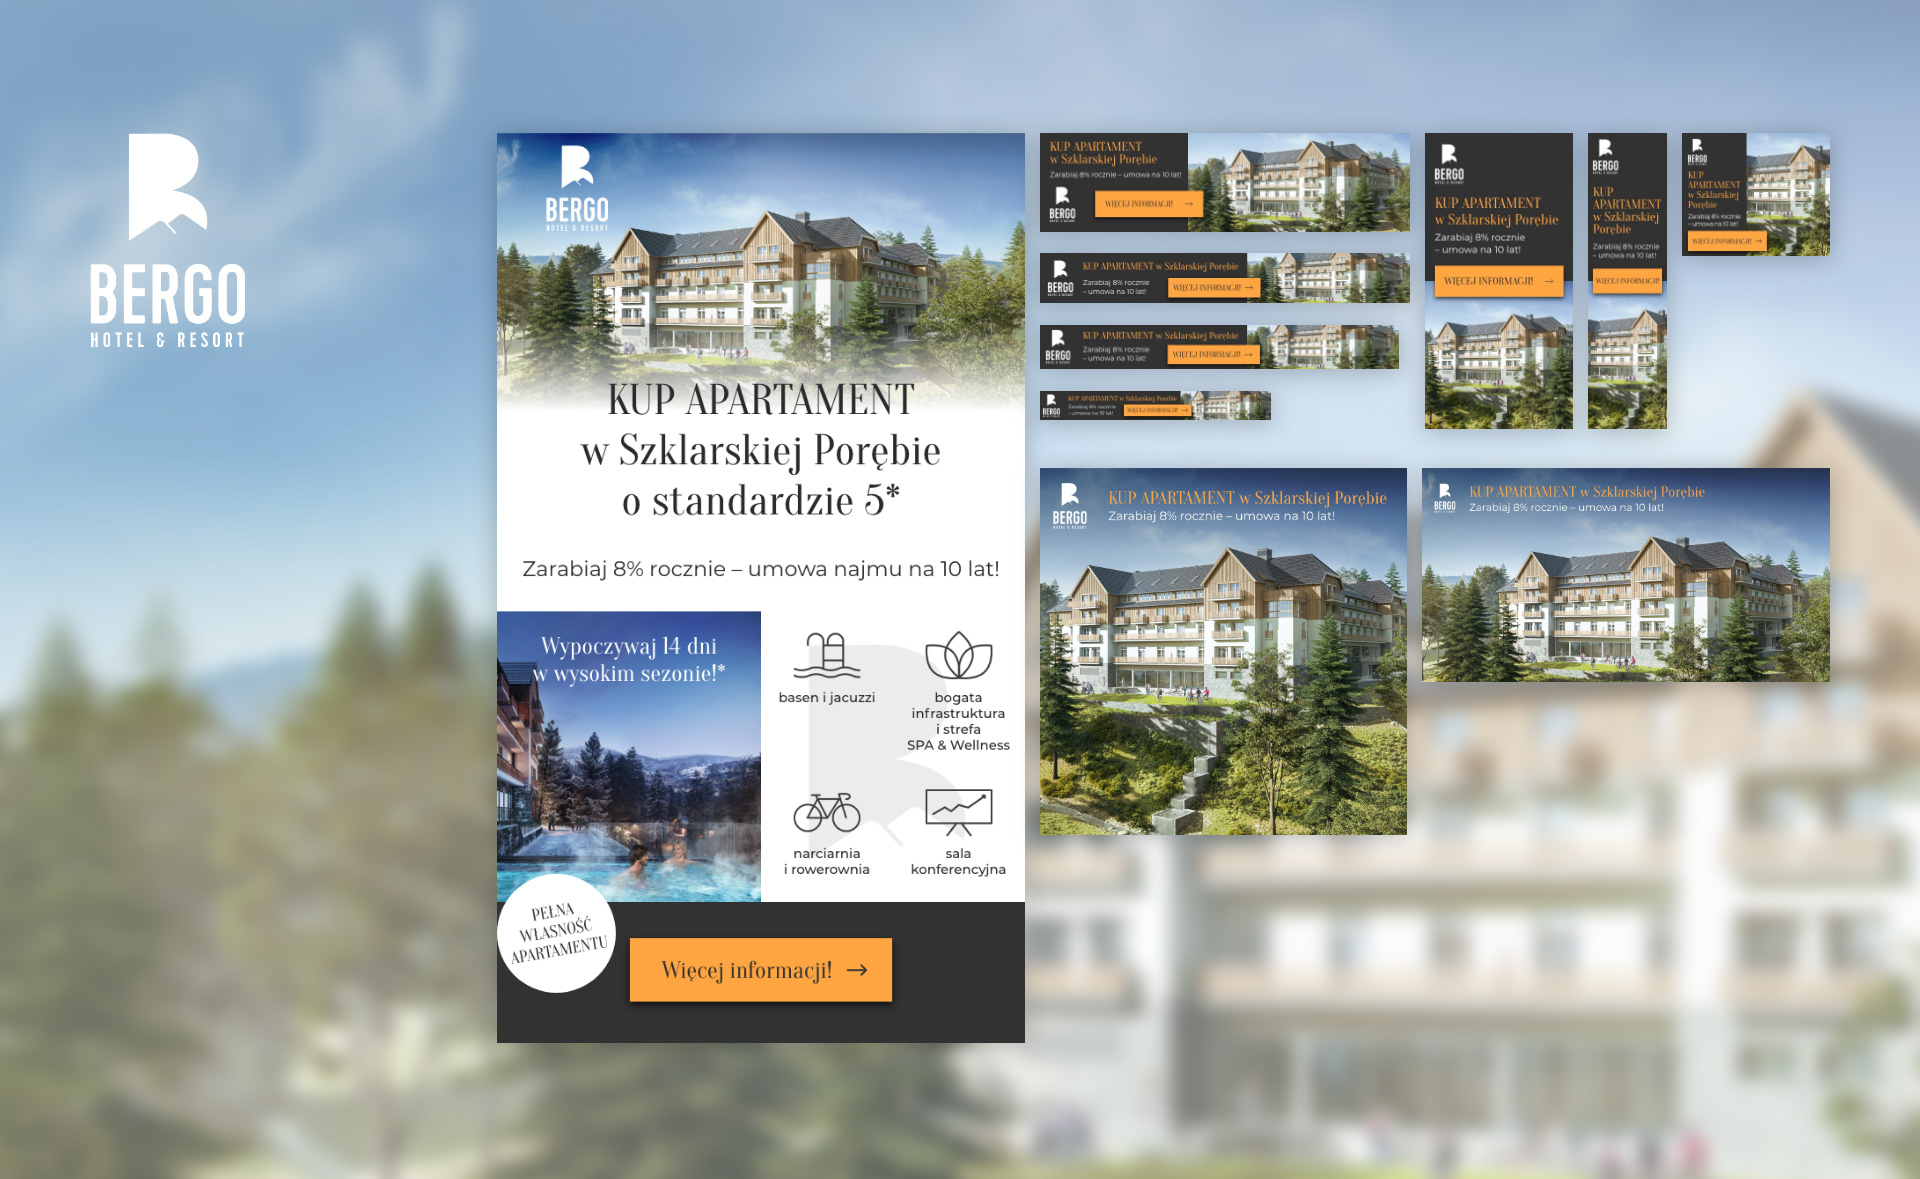 Bergo Hotel & Resort (mailing and web banners)